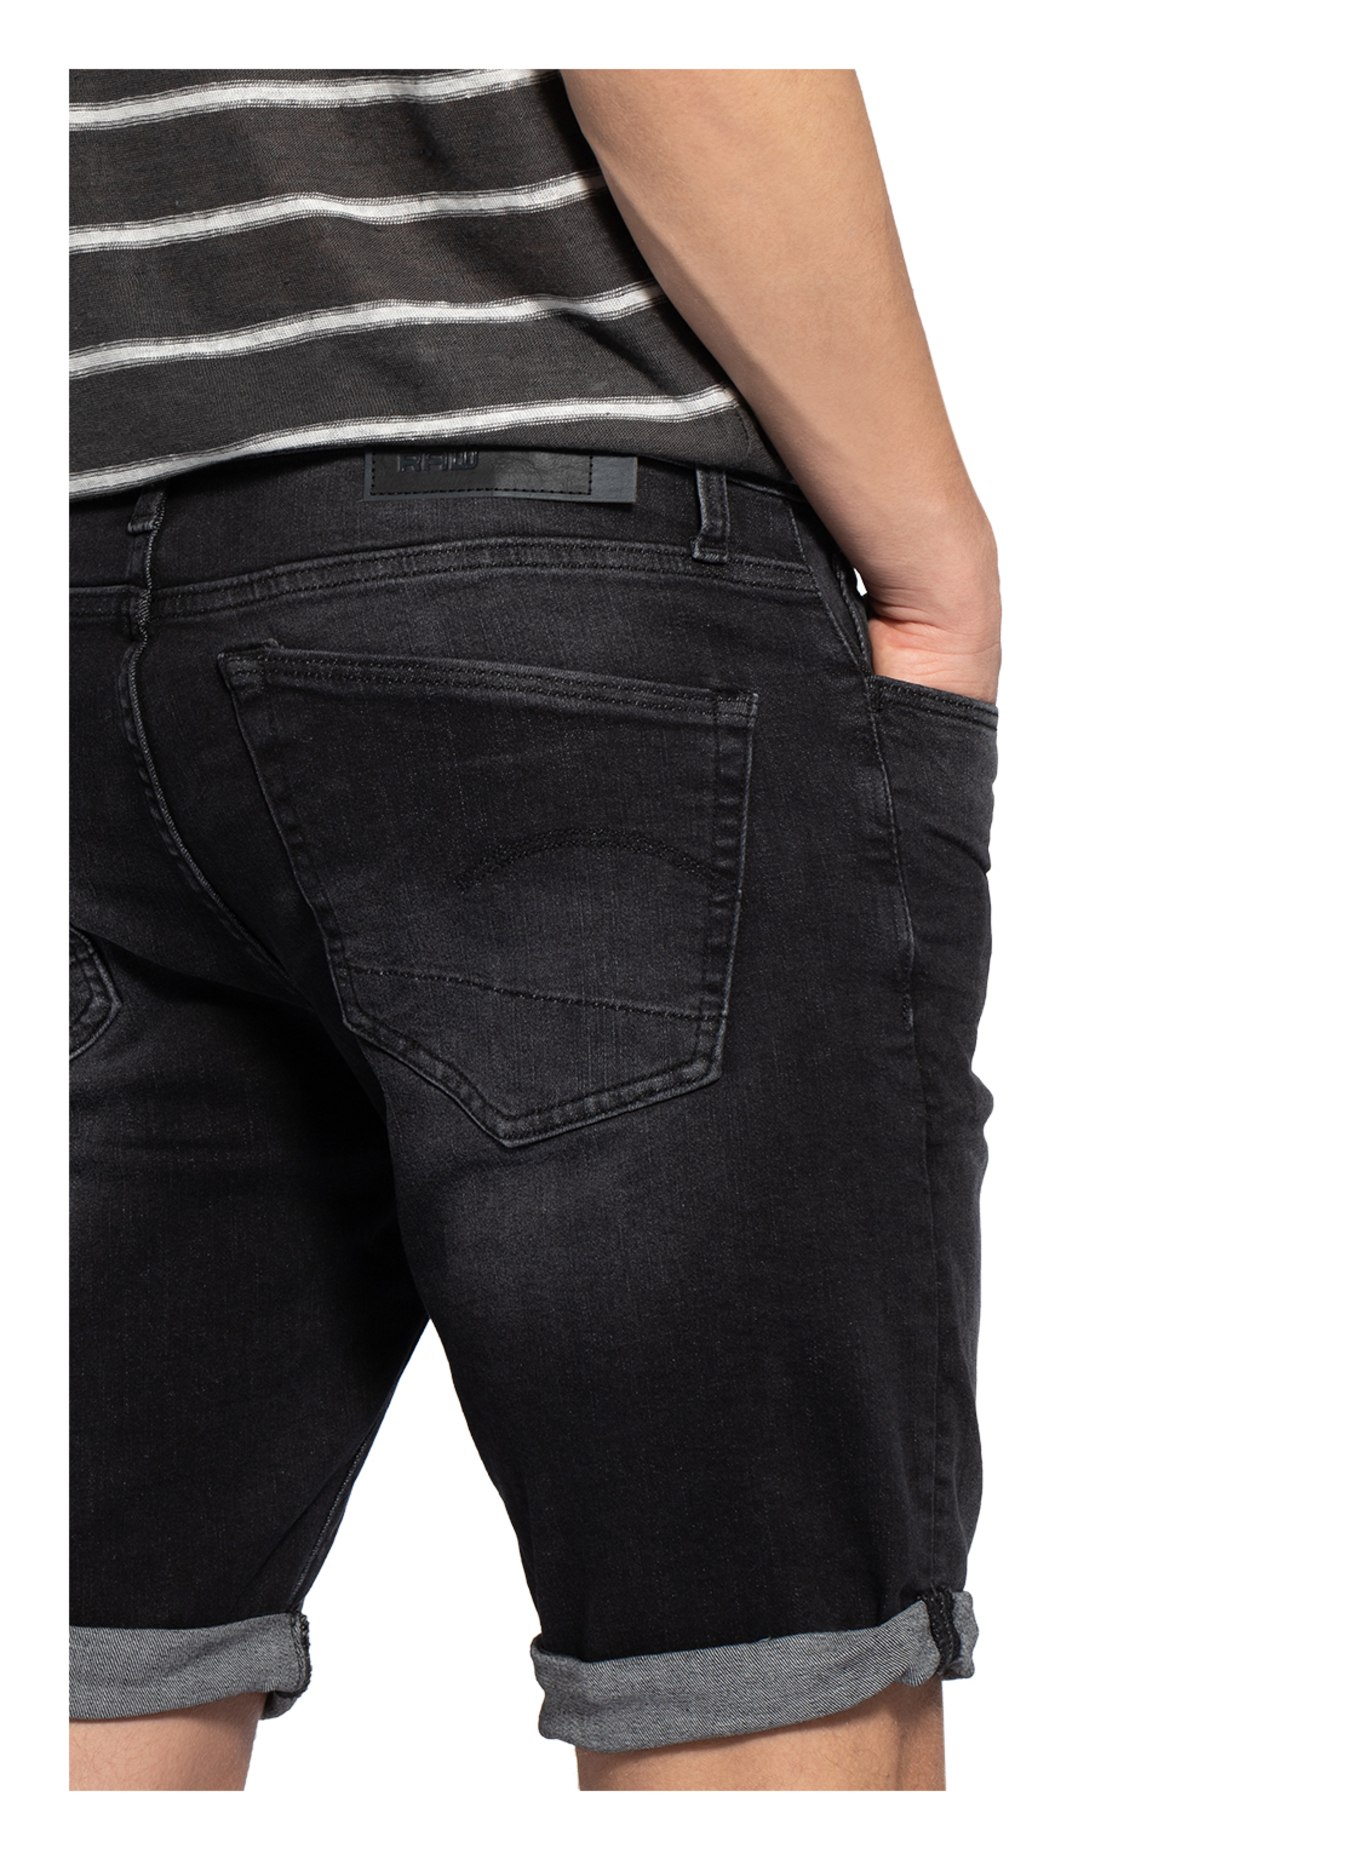 G-Star RAW Denim shorts 3301 slim fit, Color: 9887 Medium Aged Grey (Image 5)